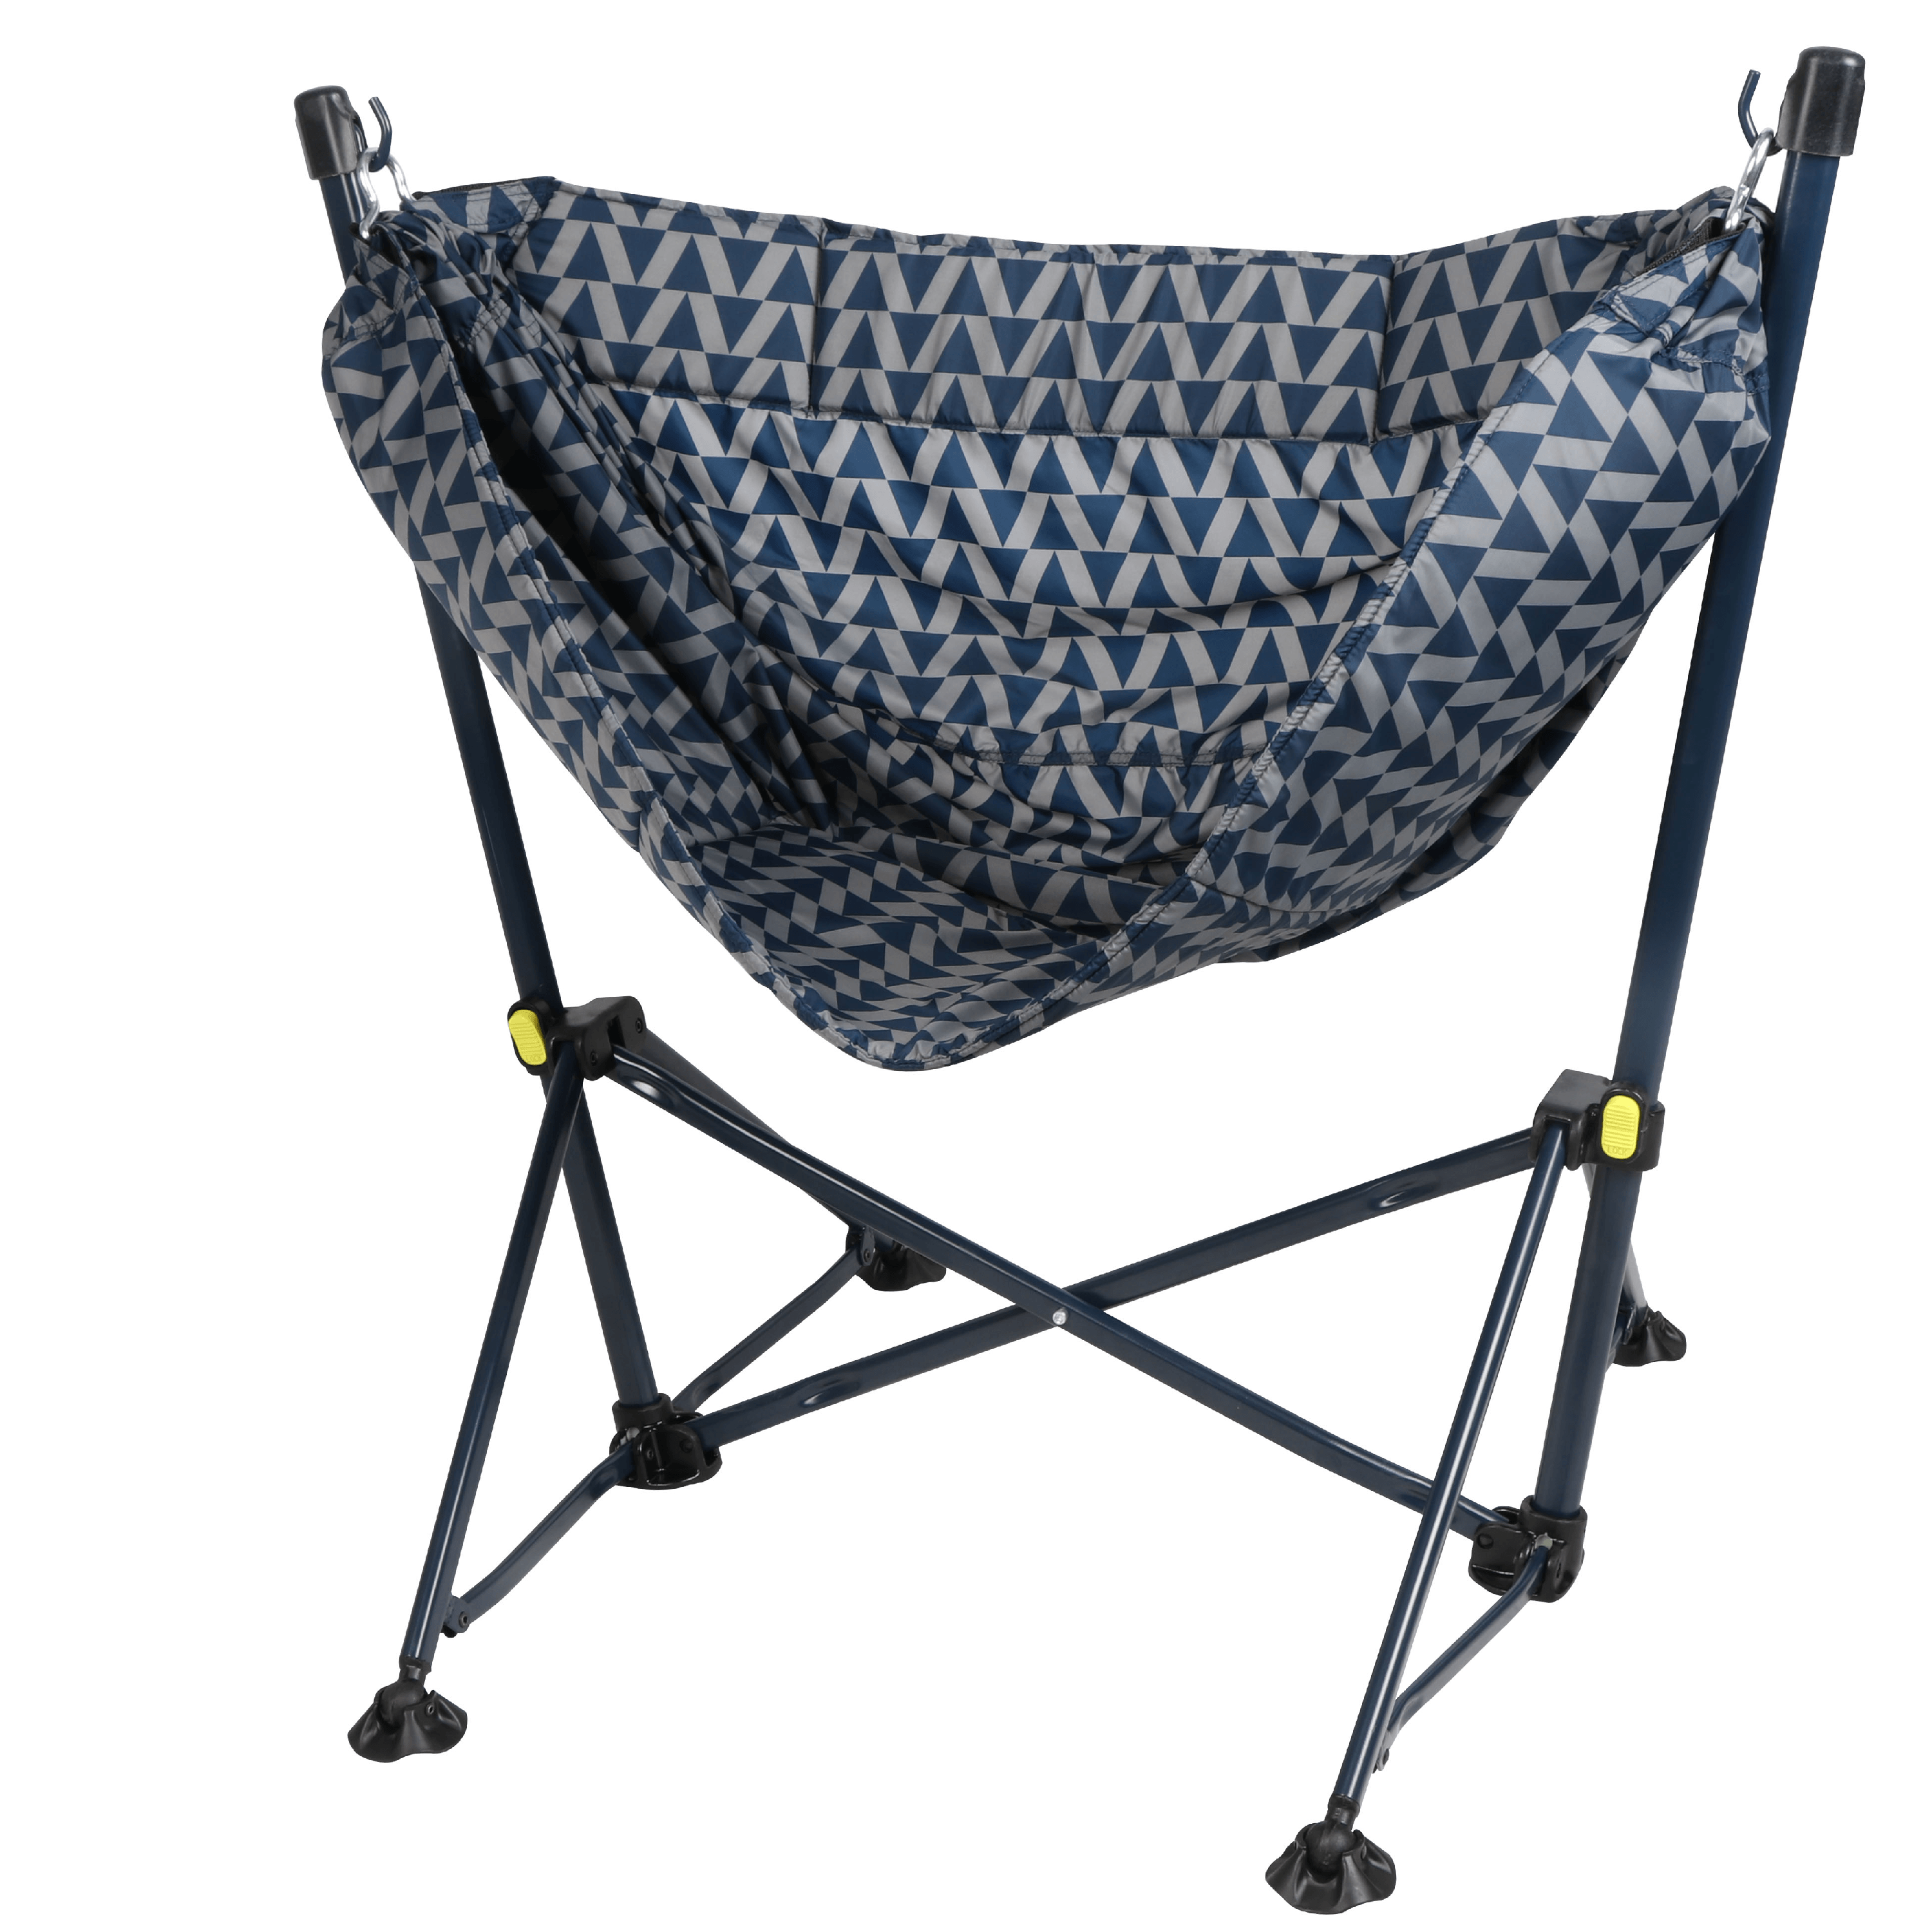 Ozark Trail Portable Hammock Camping Chair, Nylon, Blue - image 1 of 6